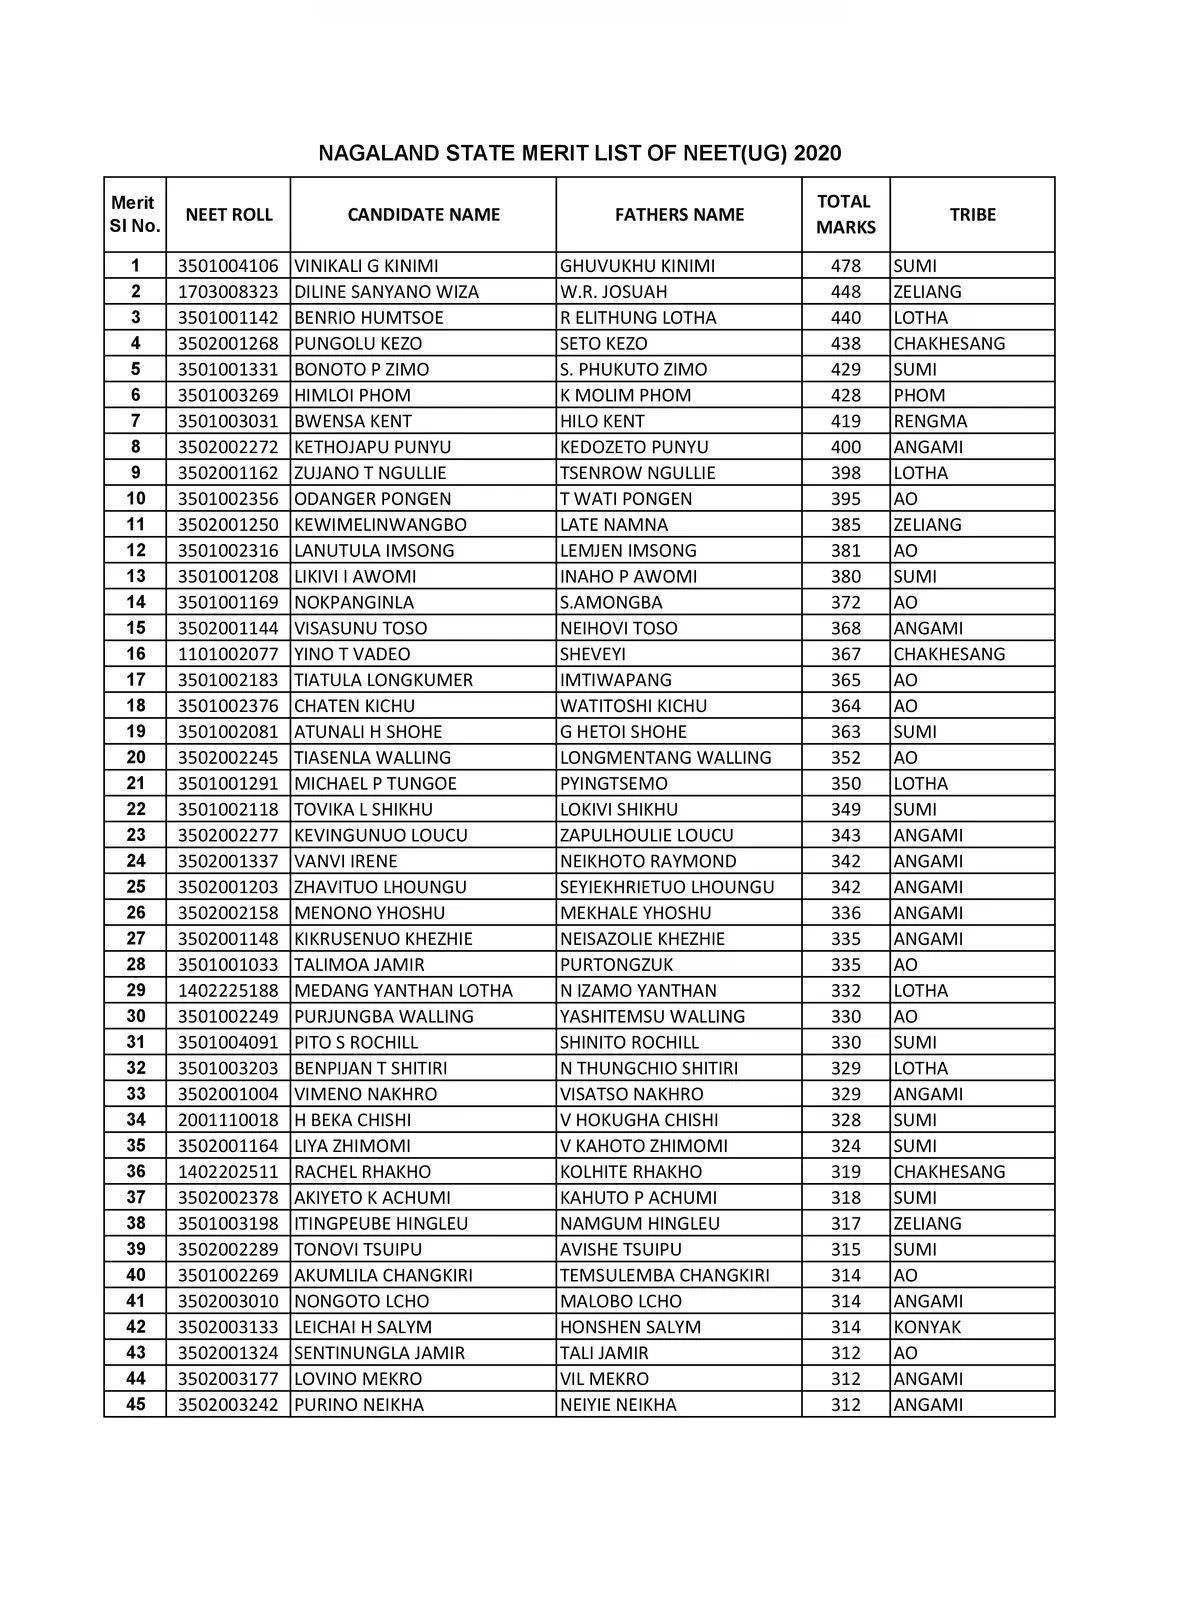 Nagaland NEET Merit List 2020